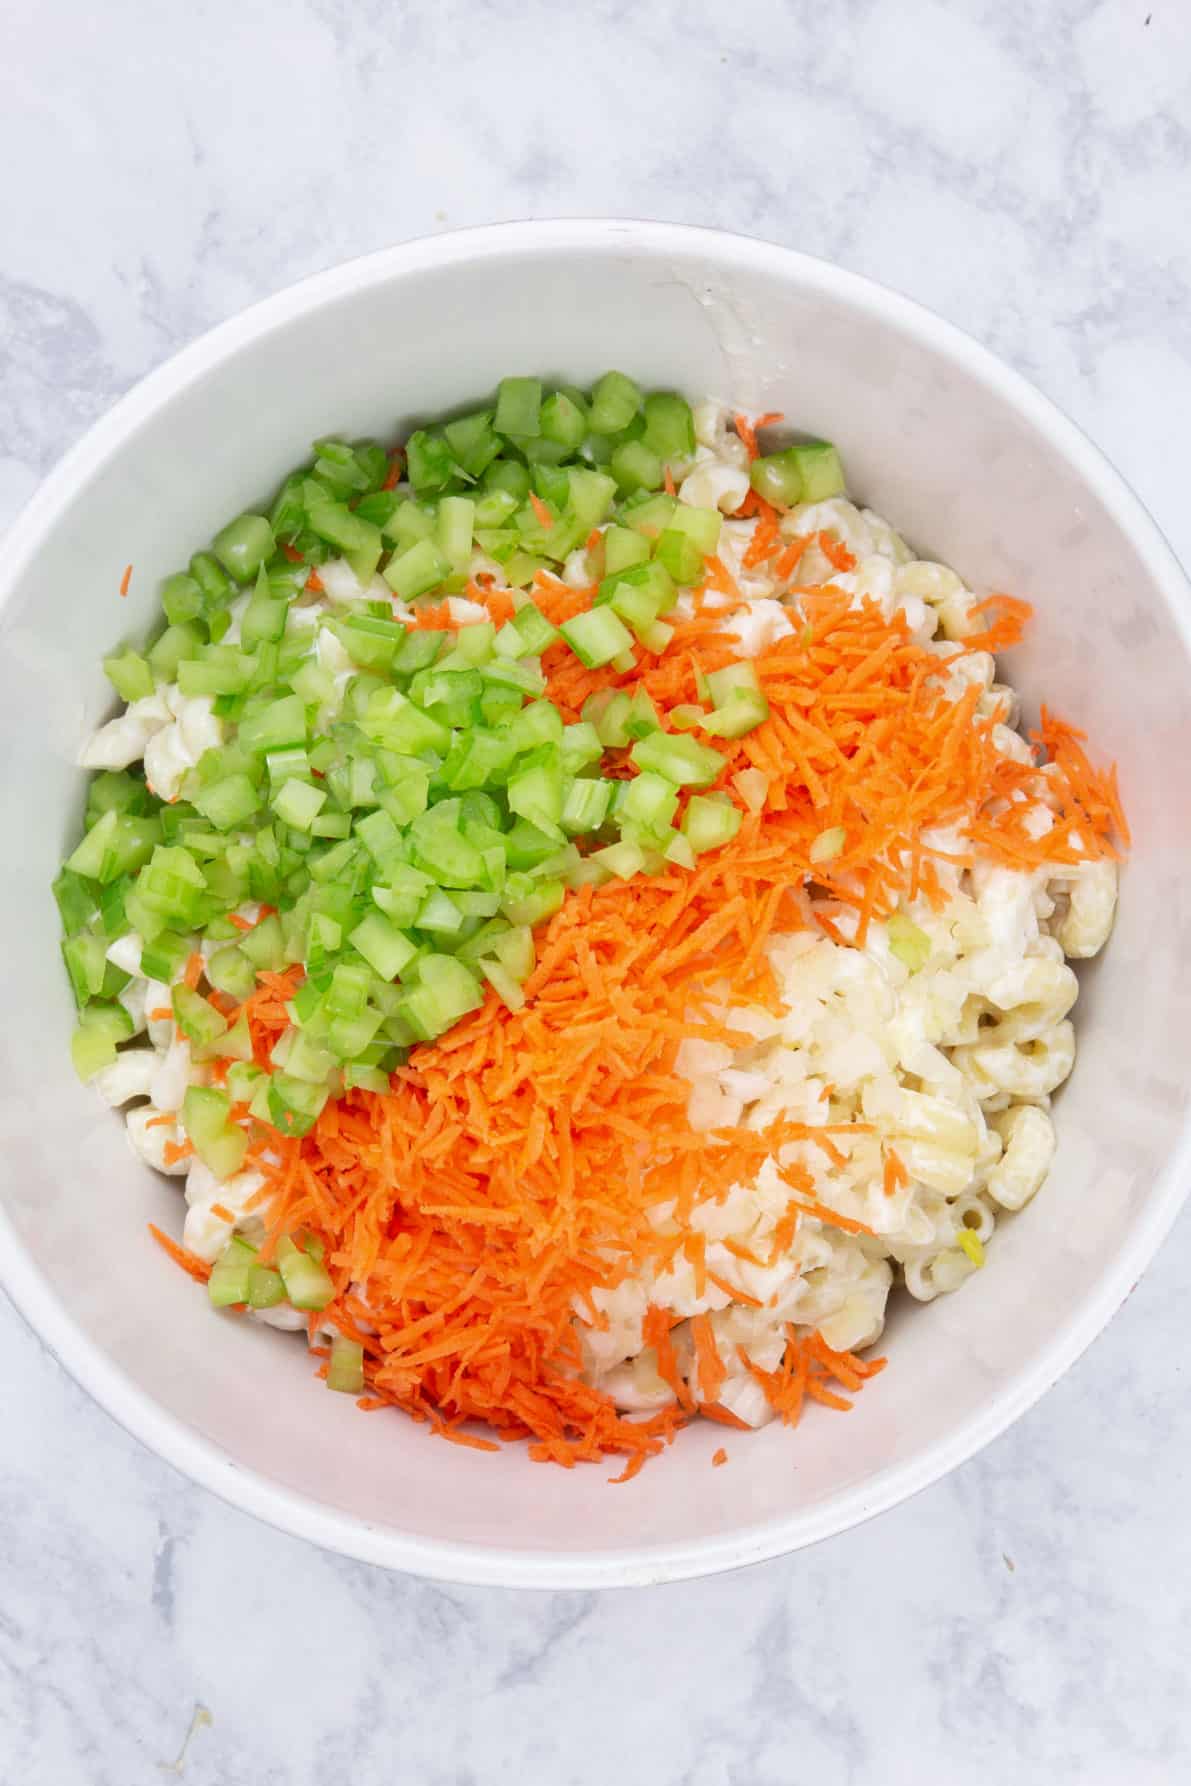 Chopped ingredients for the Hawaiian Macaroni Salad.